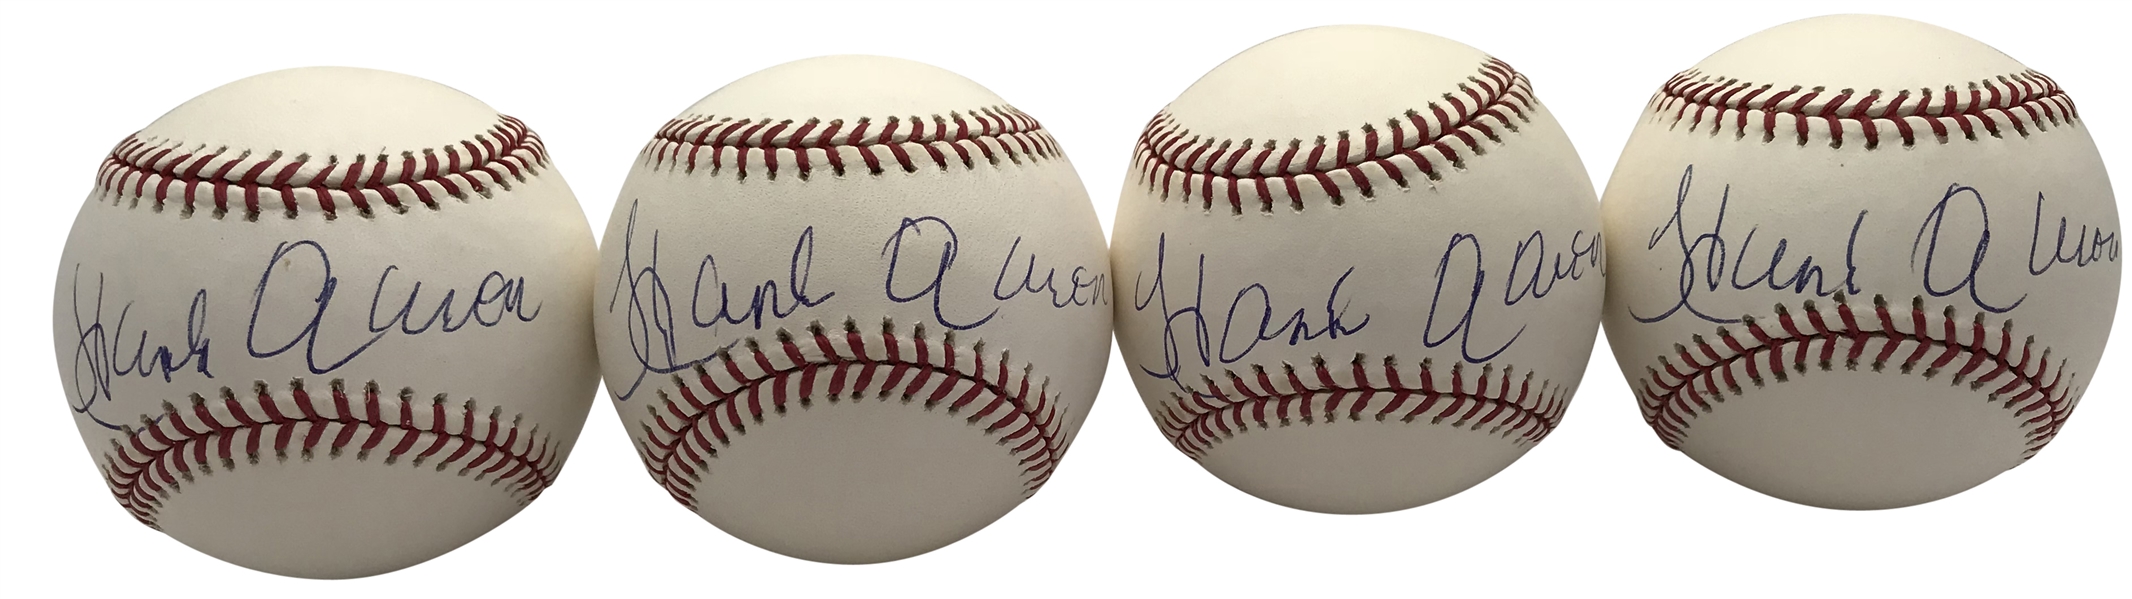 Hank Aaron Lot of Four (4) Signed OML Baseballs (PSA/DNA)